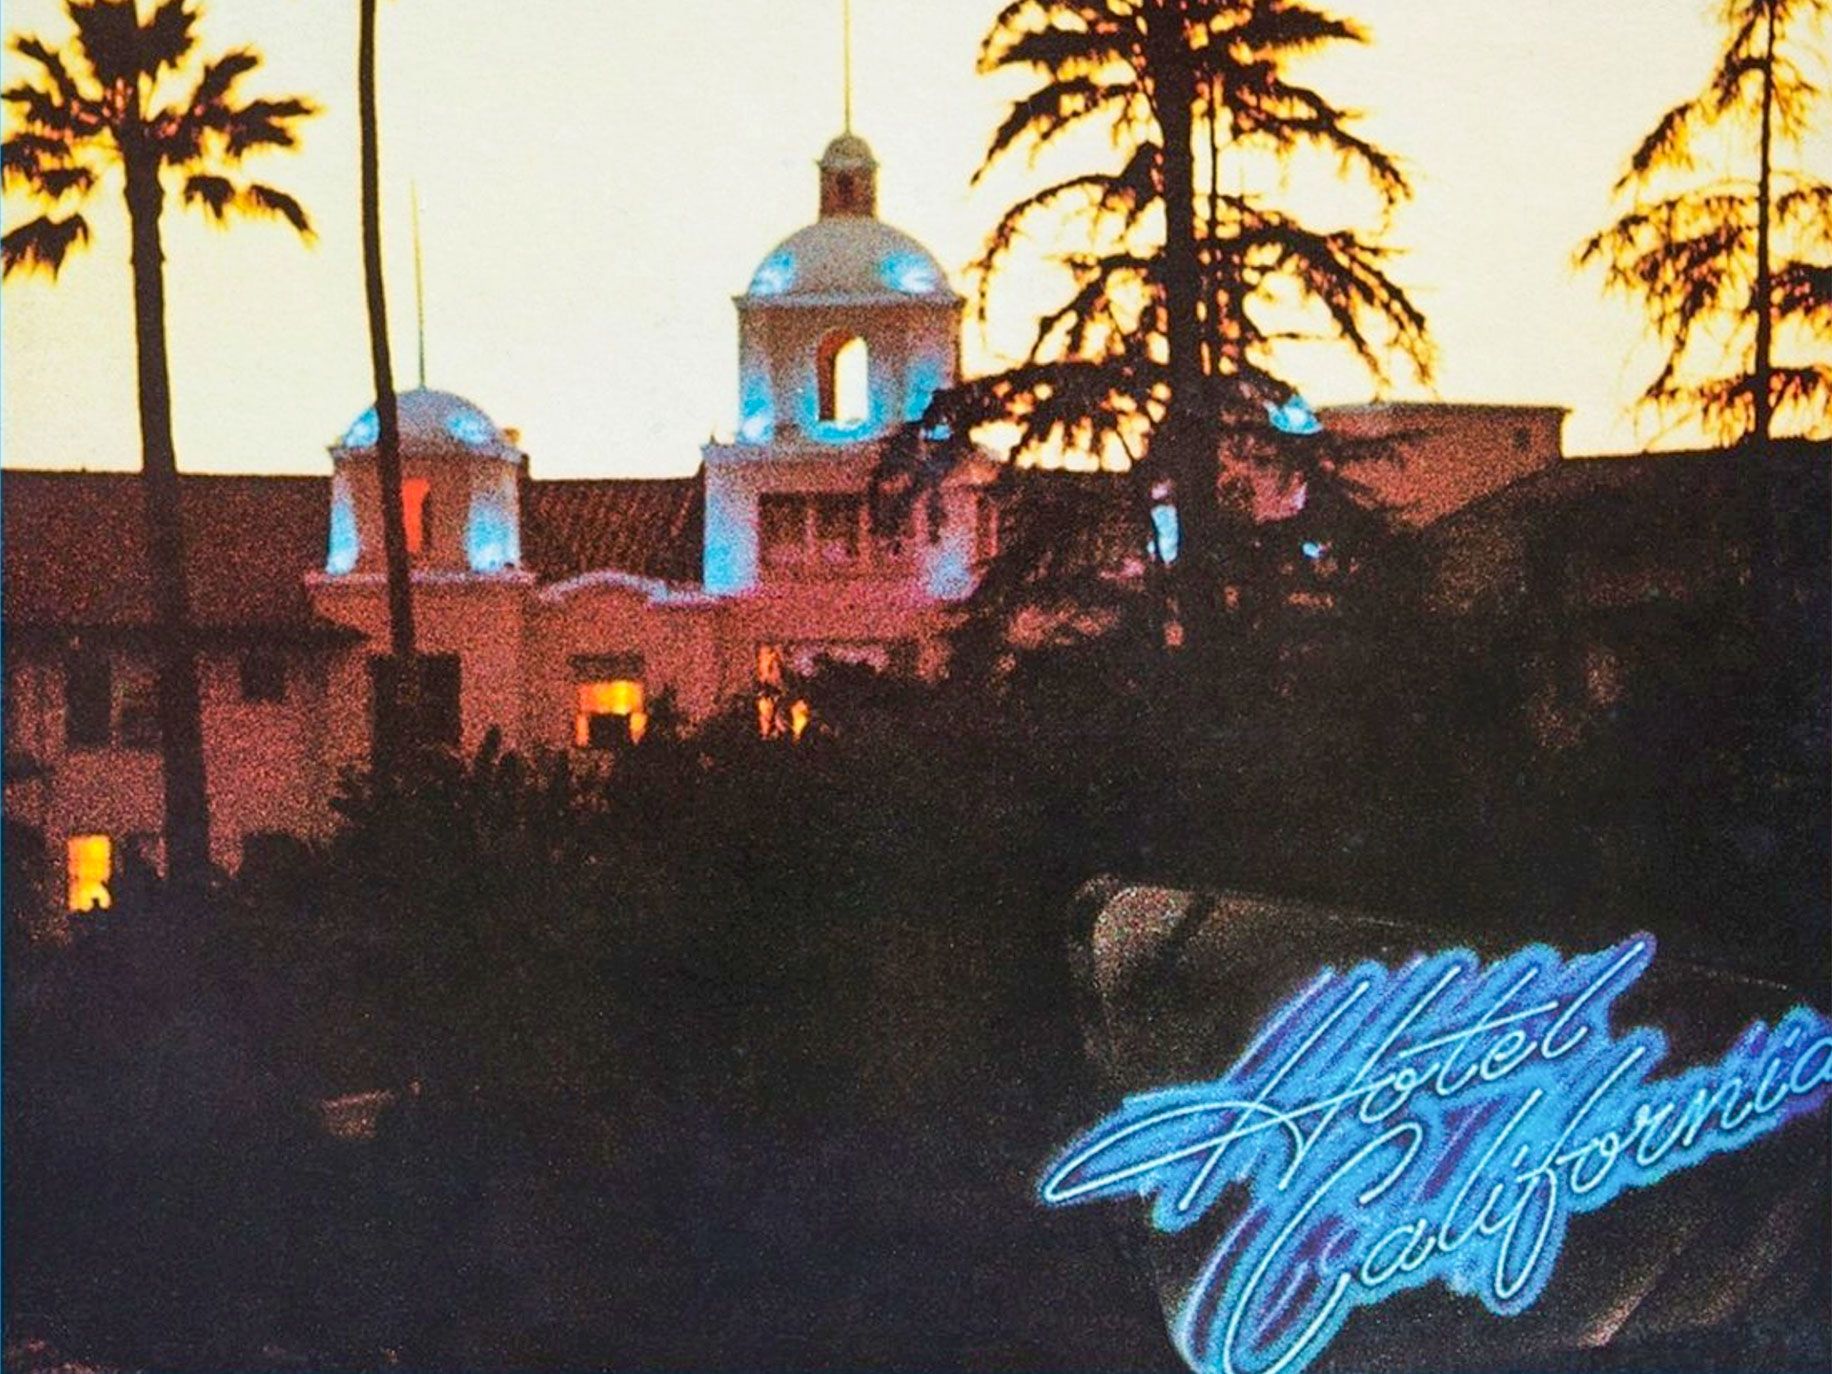 Eagles - Hotel California - Lyrics inspired AI paintings